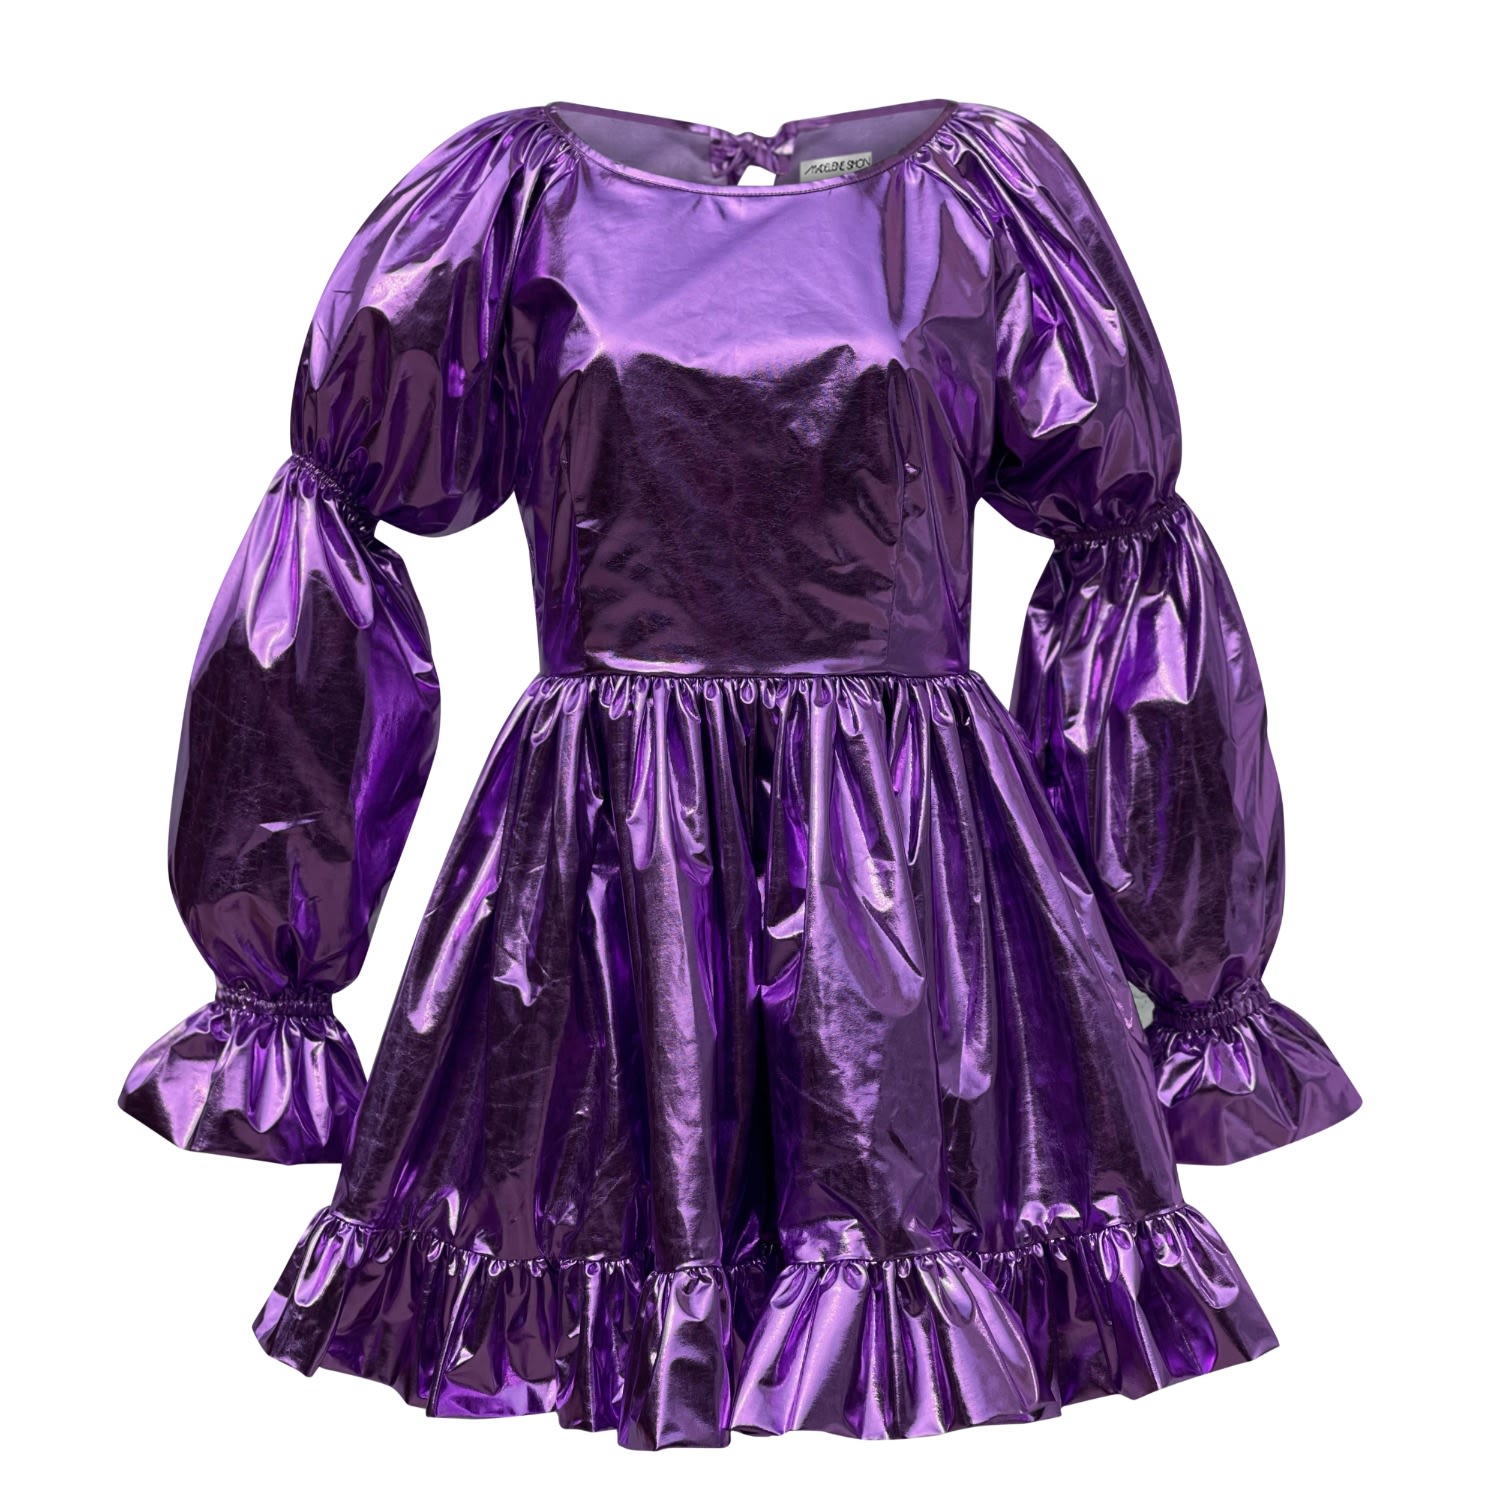 Madeleine Simon Studio Special Effects Dress In Purple